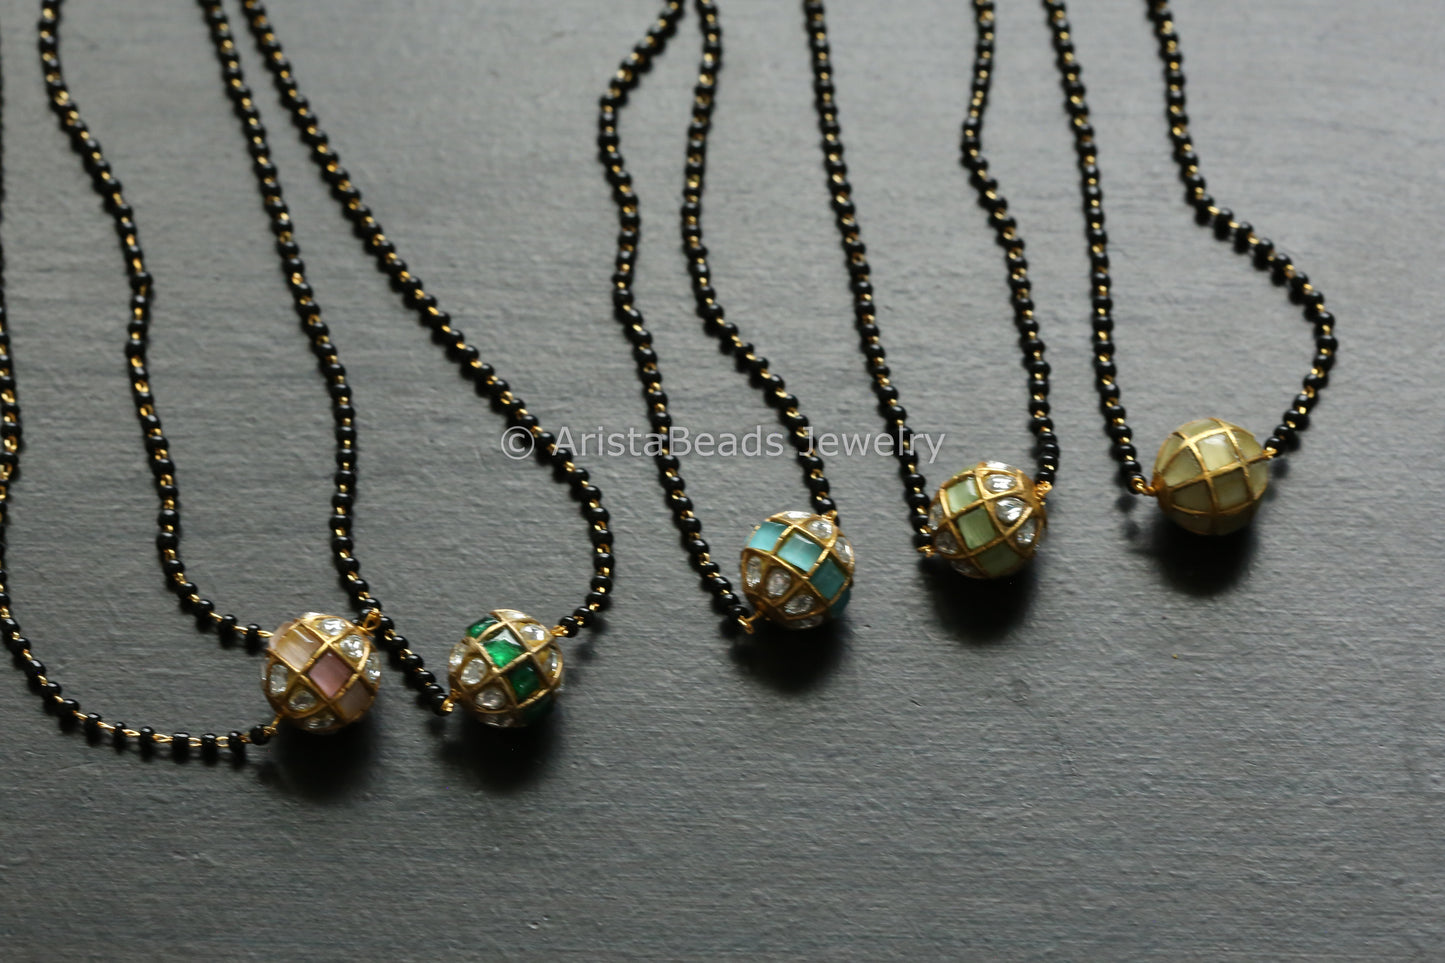 Jadau Black Bead Necklace - Mix Color